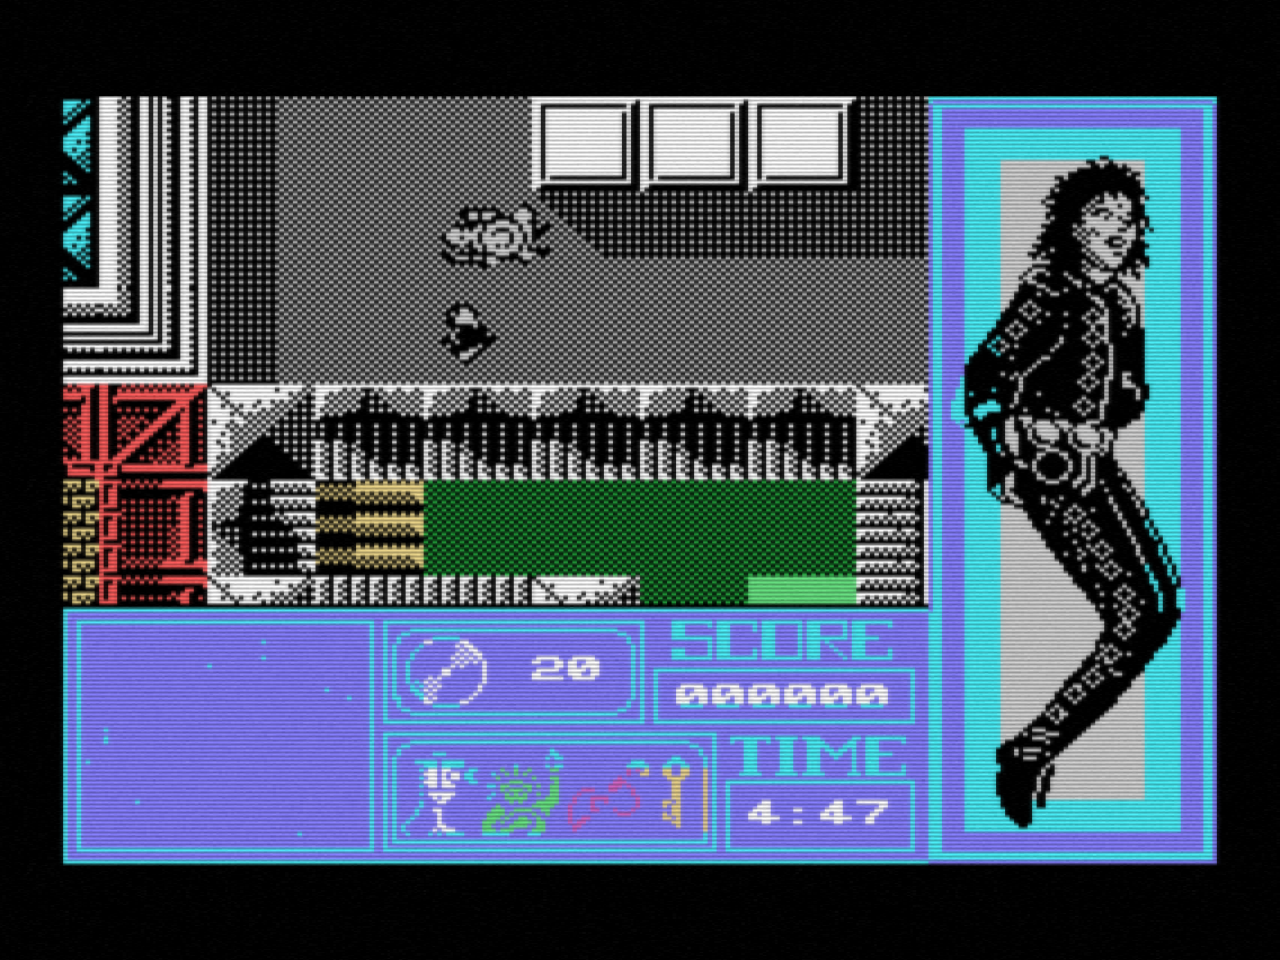 Moonwalker - The Computer Game (1989, MSX, US Gold) | Generation MSX Michael Jackson In Gold Magazine